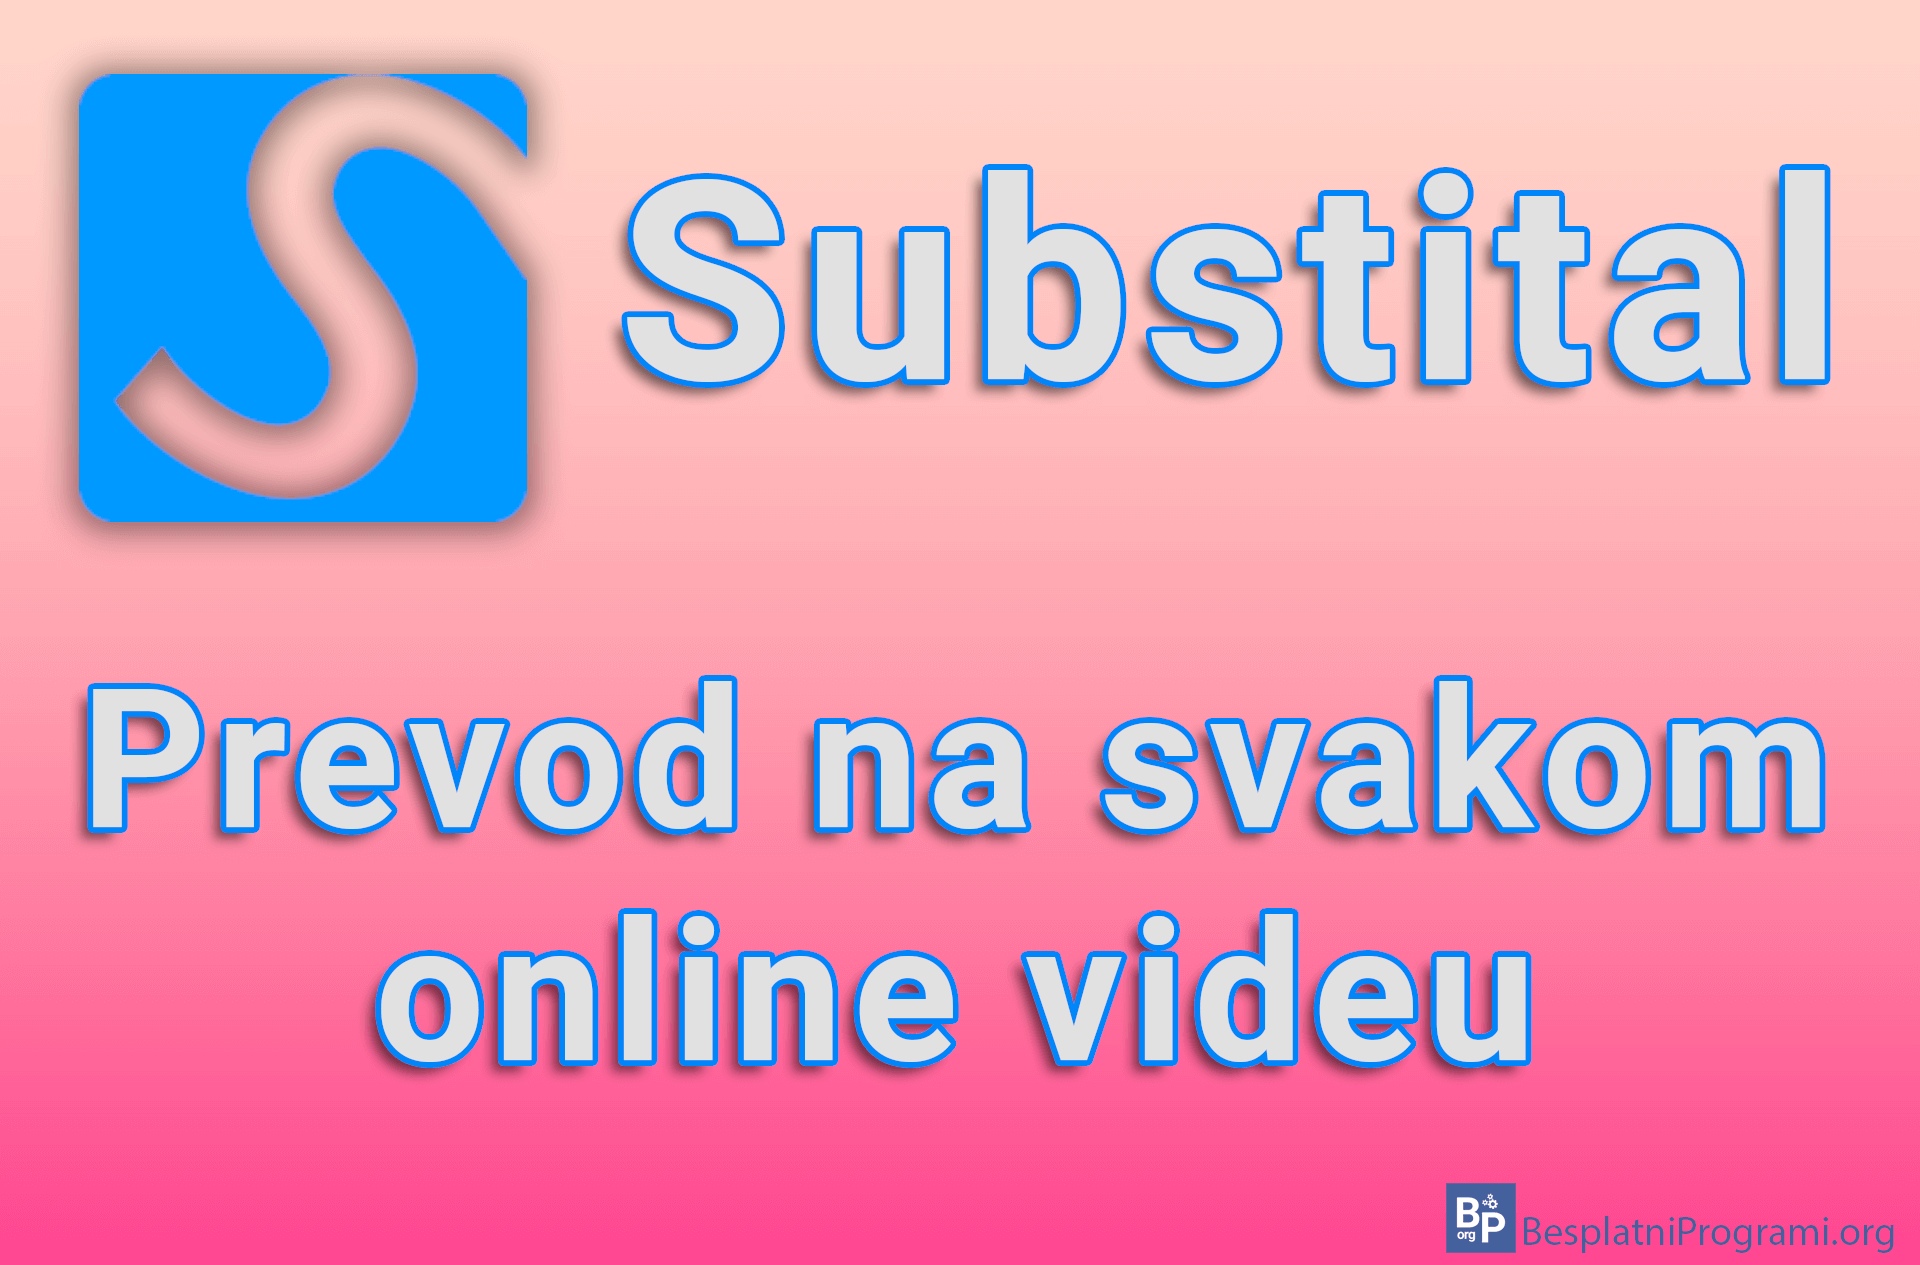 Substital - Prevod na svakom online videu